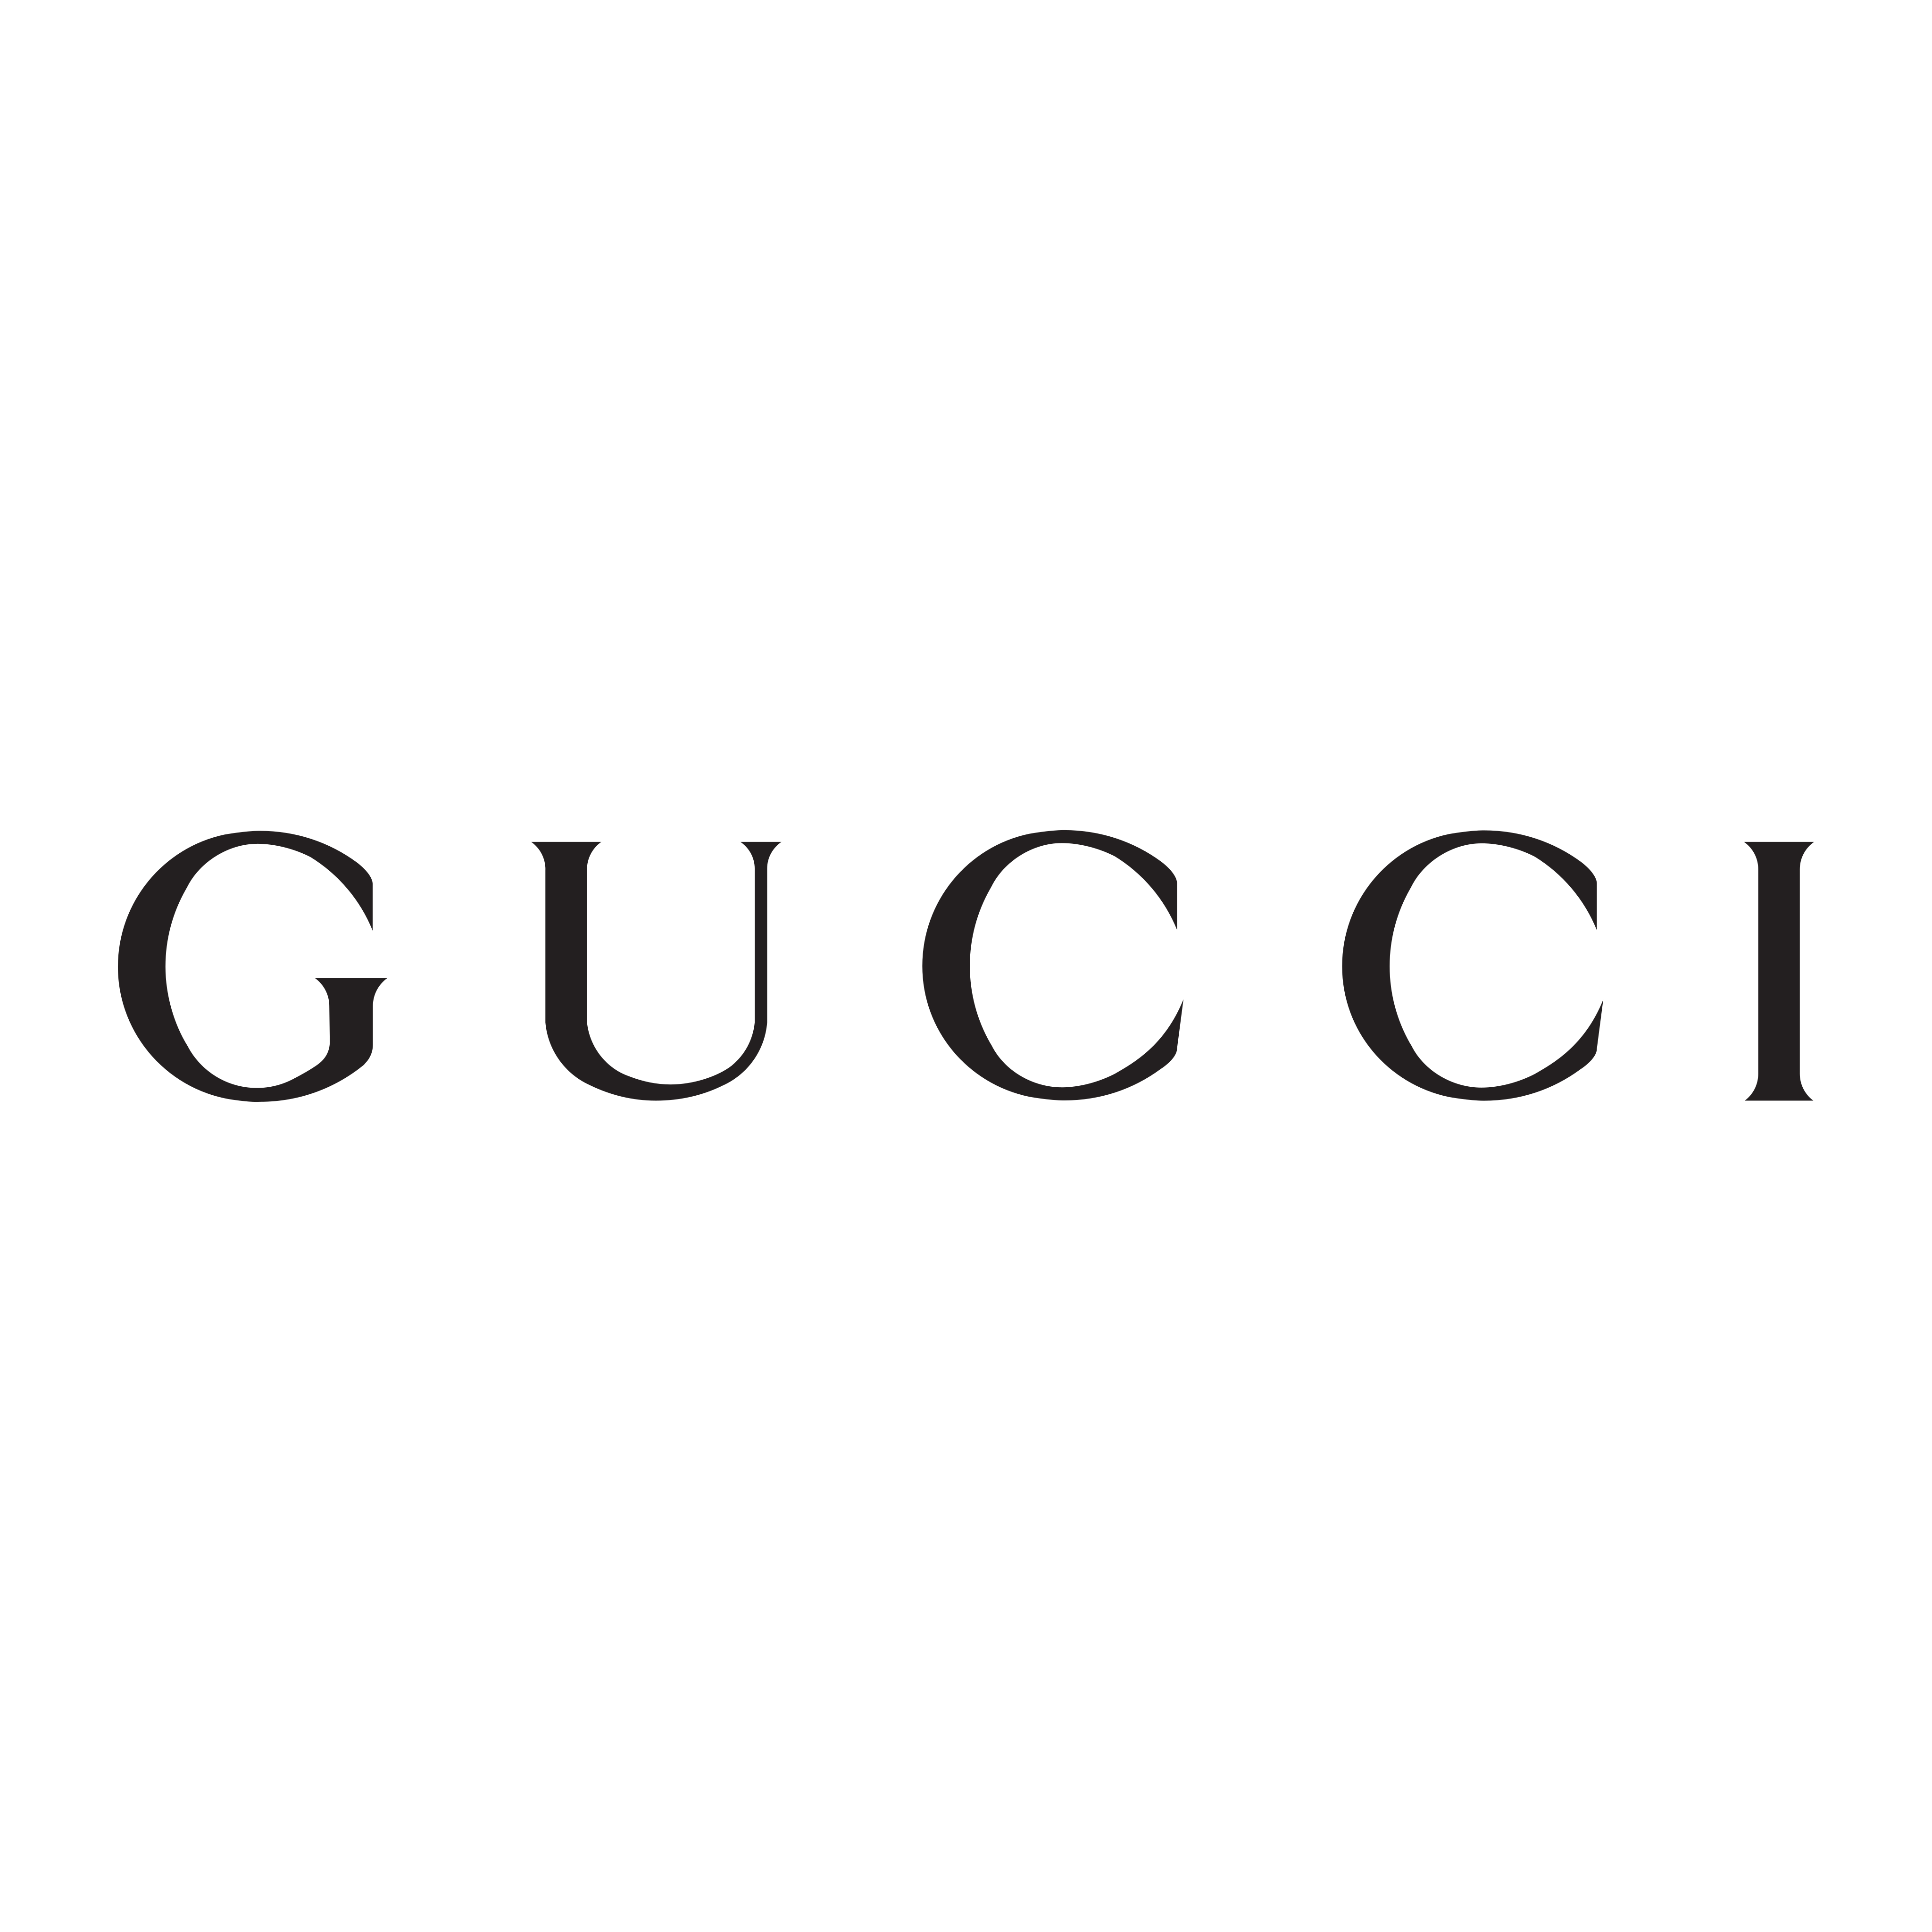 gucci logo 0 - Gucci Logo